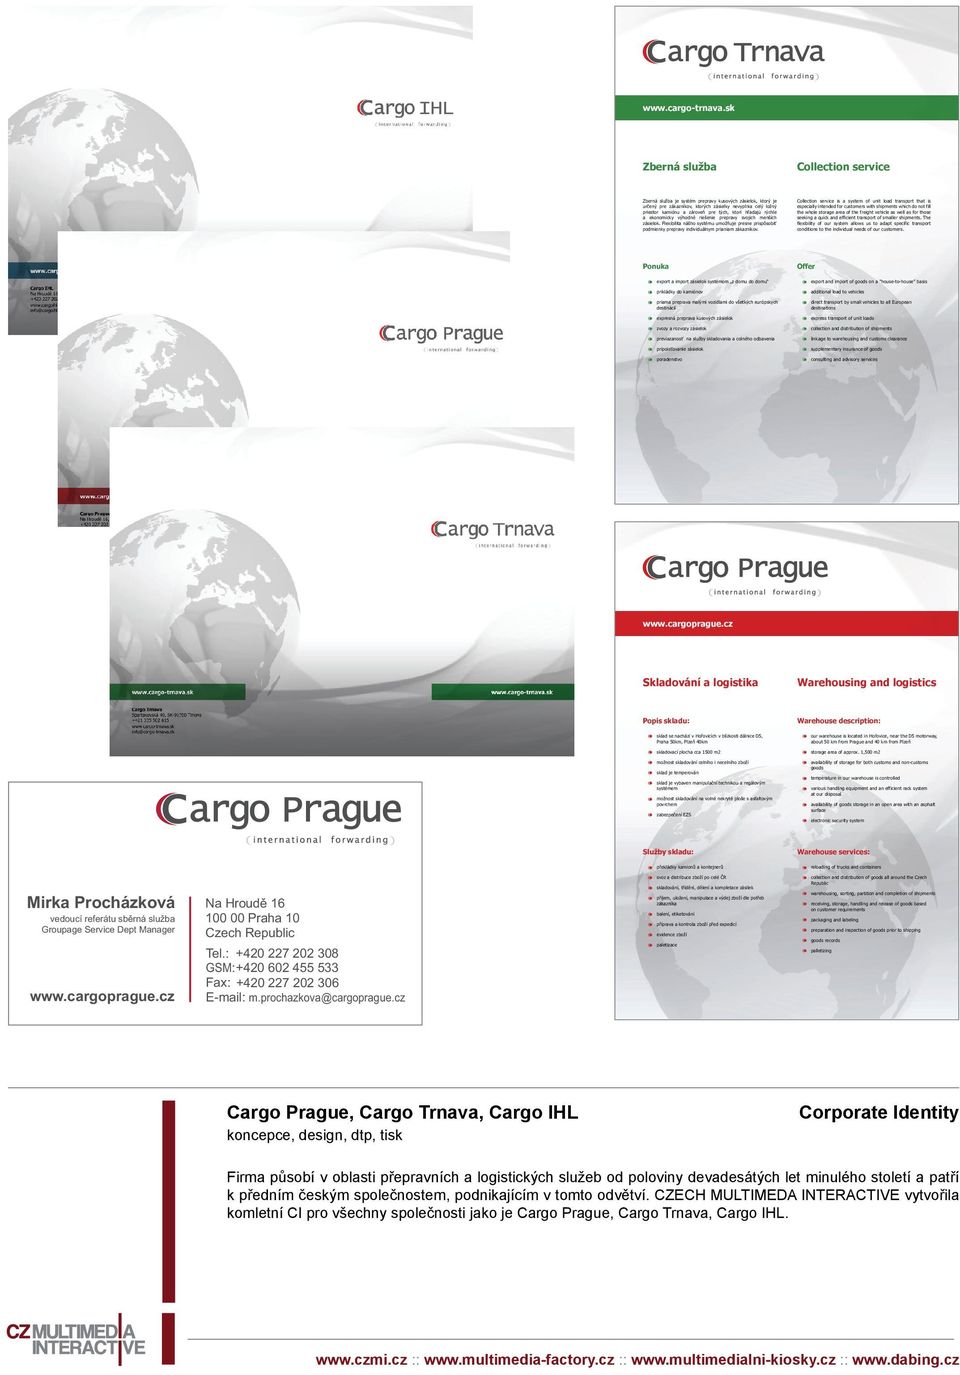 Service Dept Manager Czech Republic Tel.: +420 227 202 308 GSM: +420 602 455 533 Fax: +420 227 202 306 www.cargoprague.cz E-mail: m.prochazkova@cargoprague.